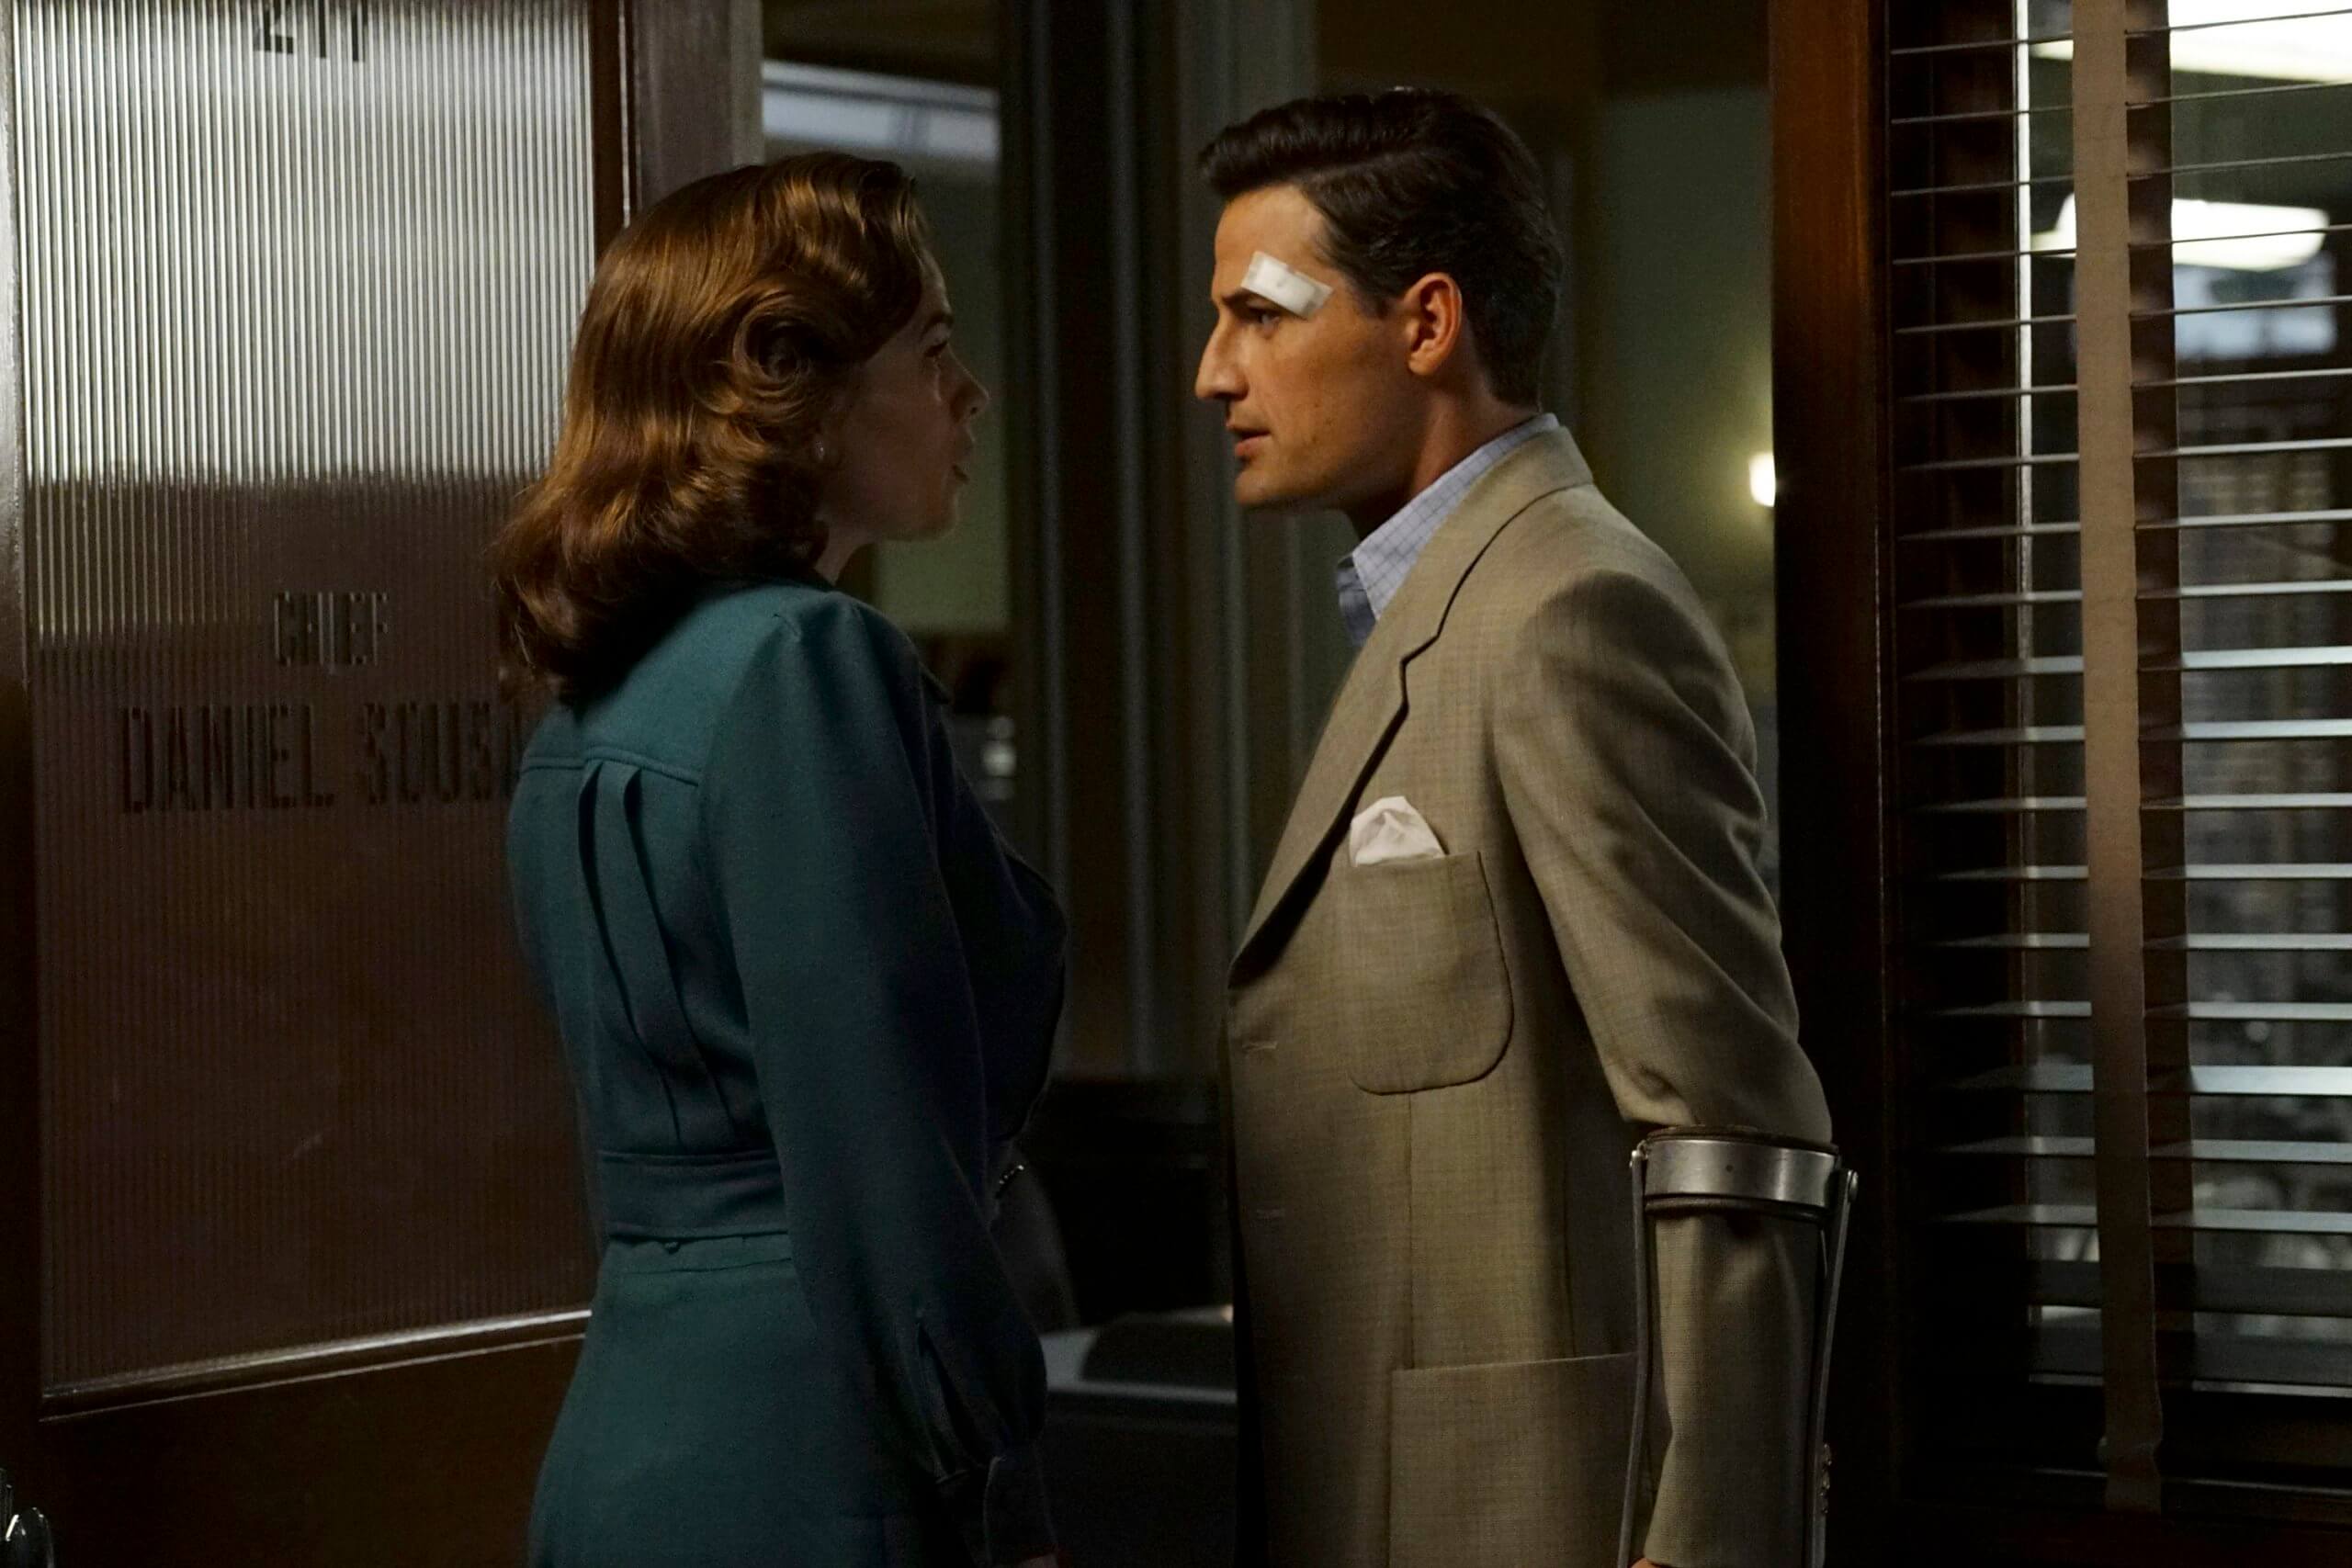 Agent Carter Season 3 Synopsis